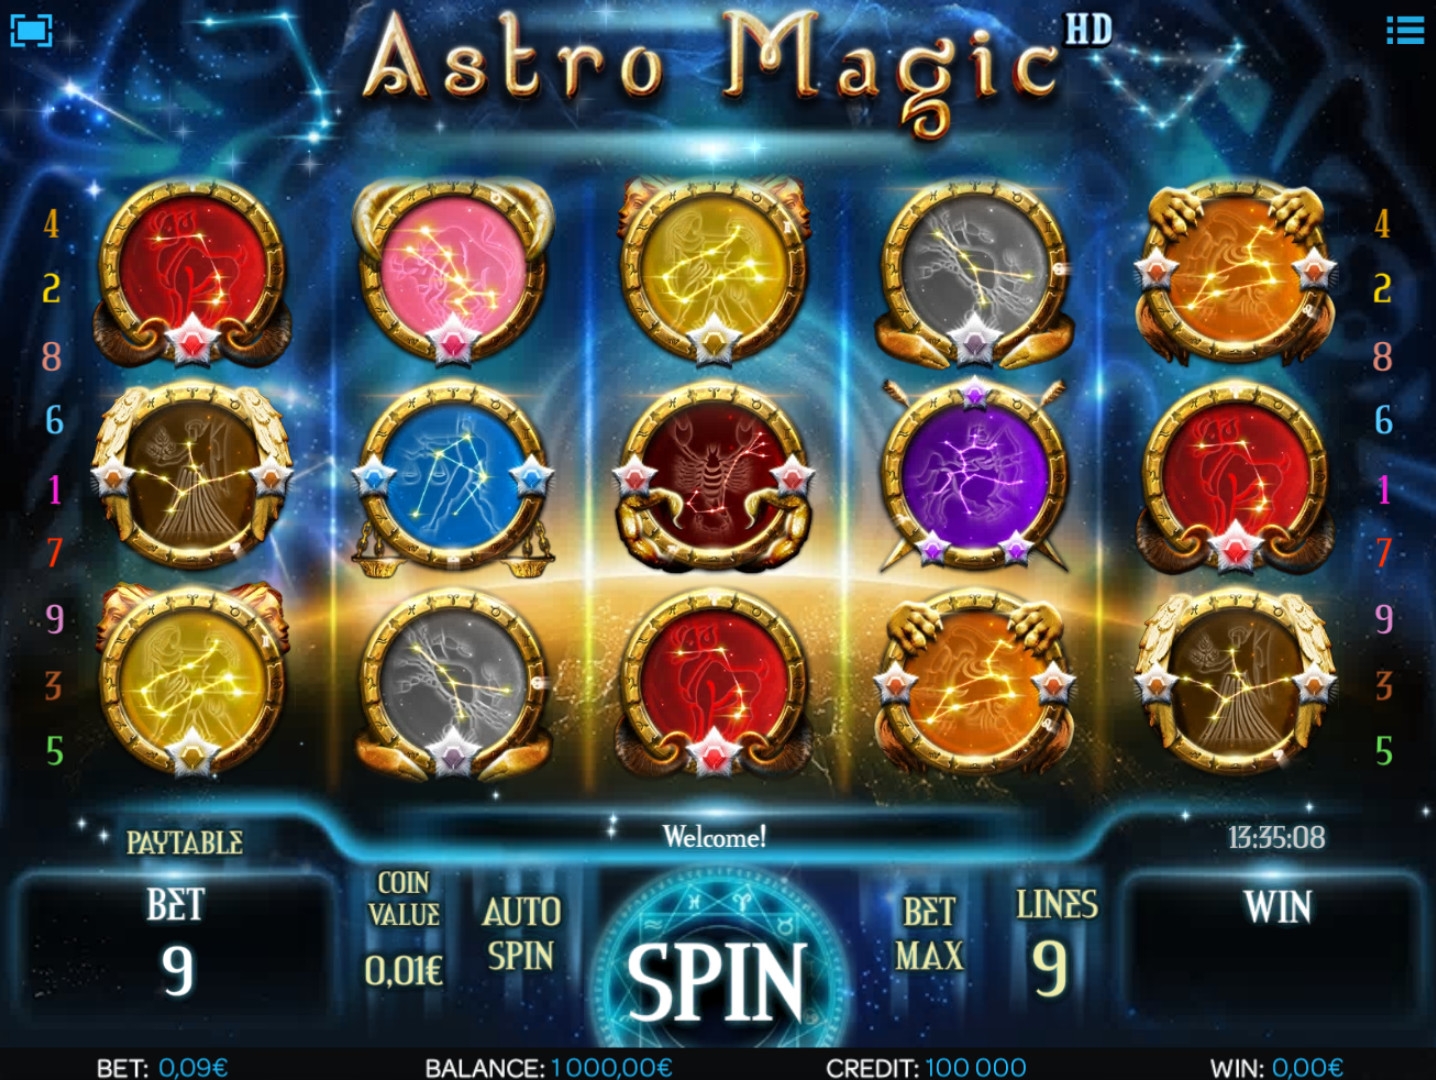 Astro Magic (Astro Magic) from category Slots